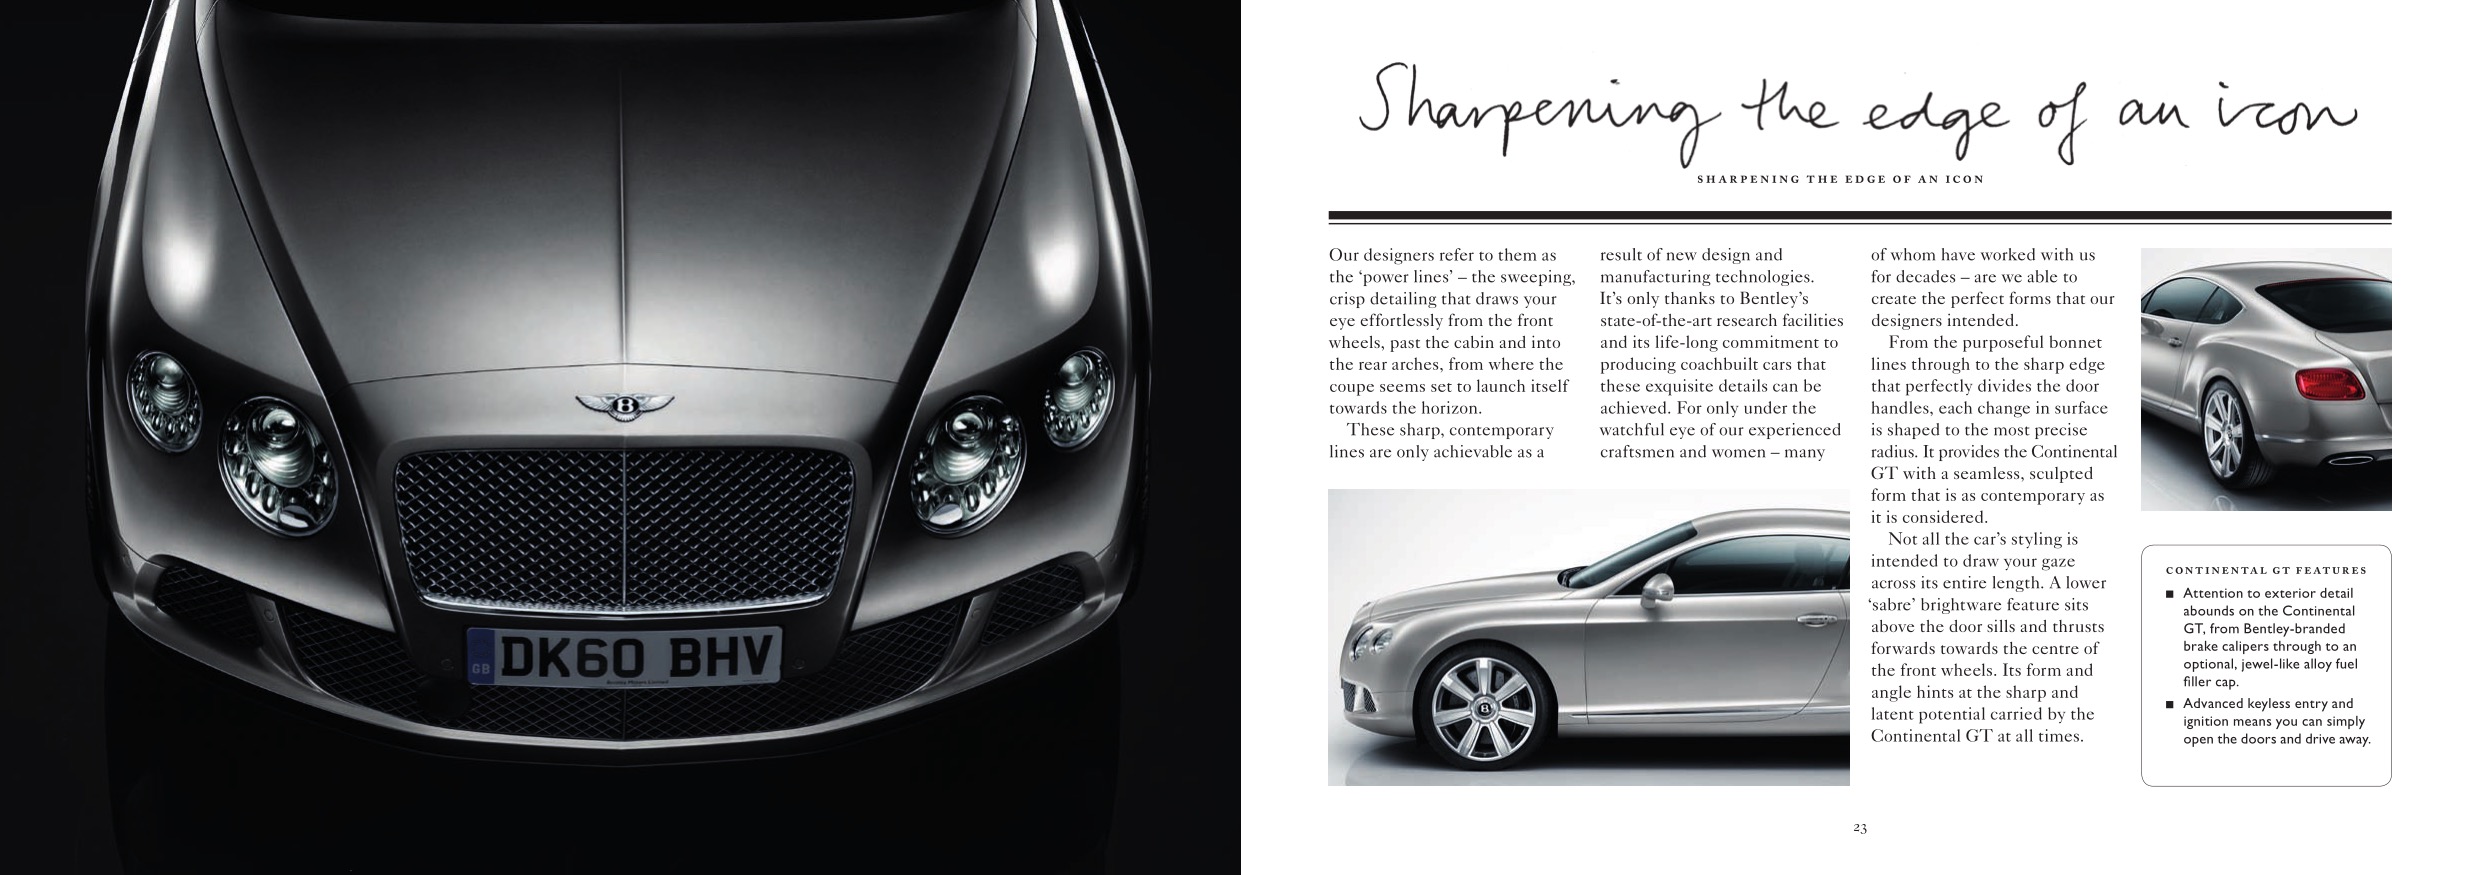 2011 Bentley Continental GT Brochure Page 41